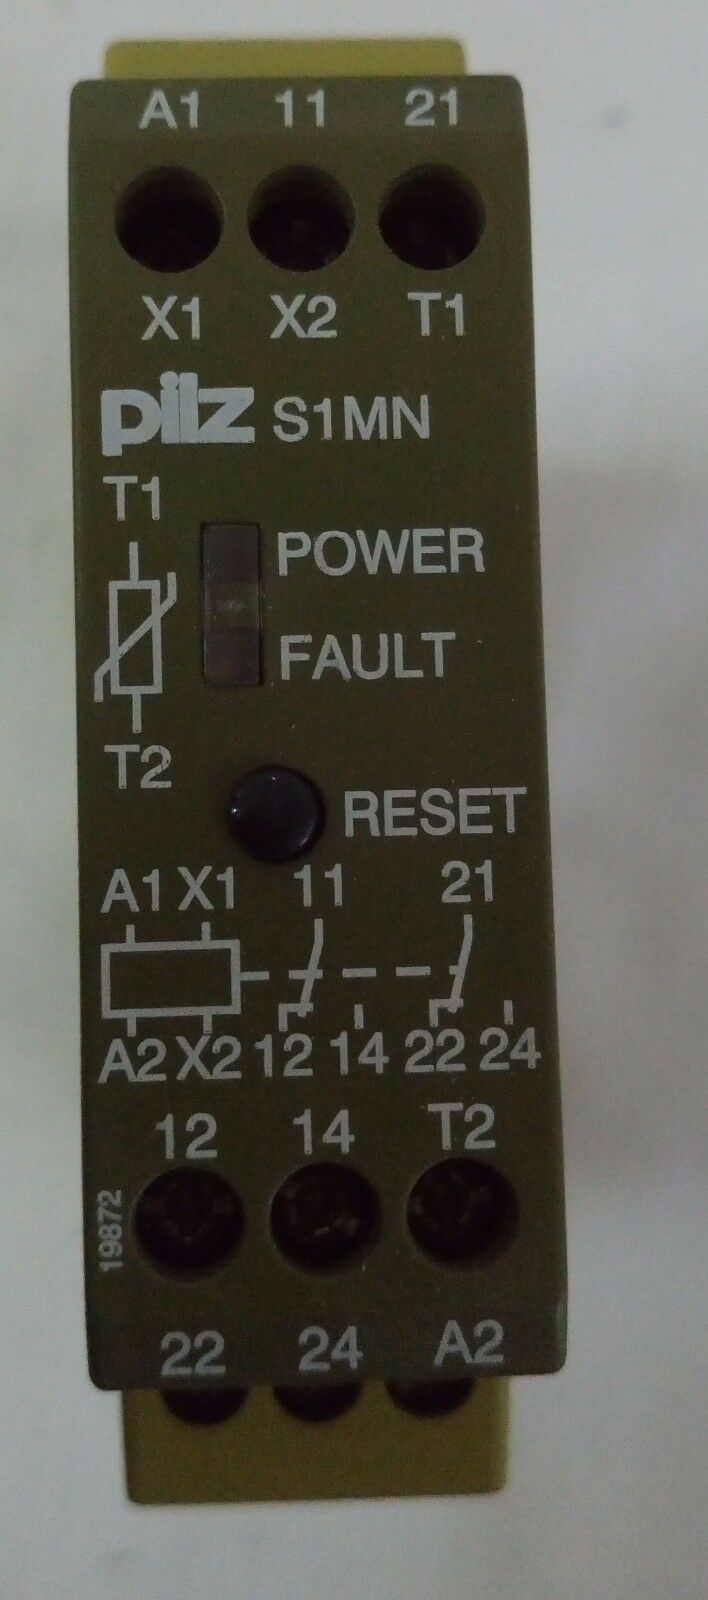 Pilz s1mn 110vac 2c/0 热敏电阻监测继电器 ID 839410 全新未使用 